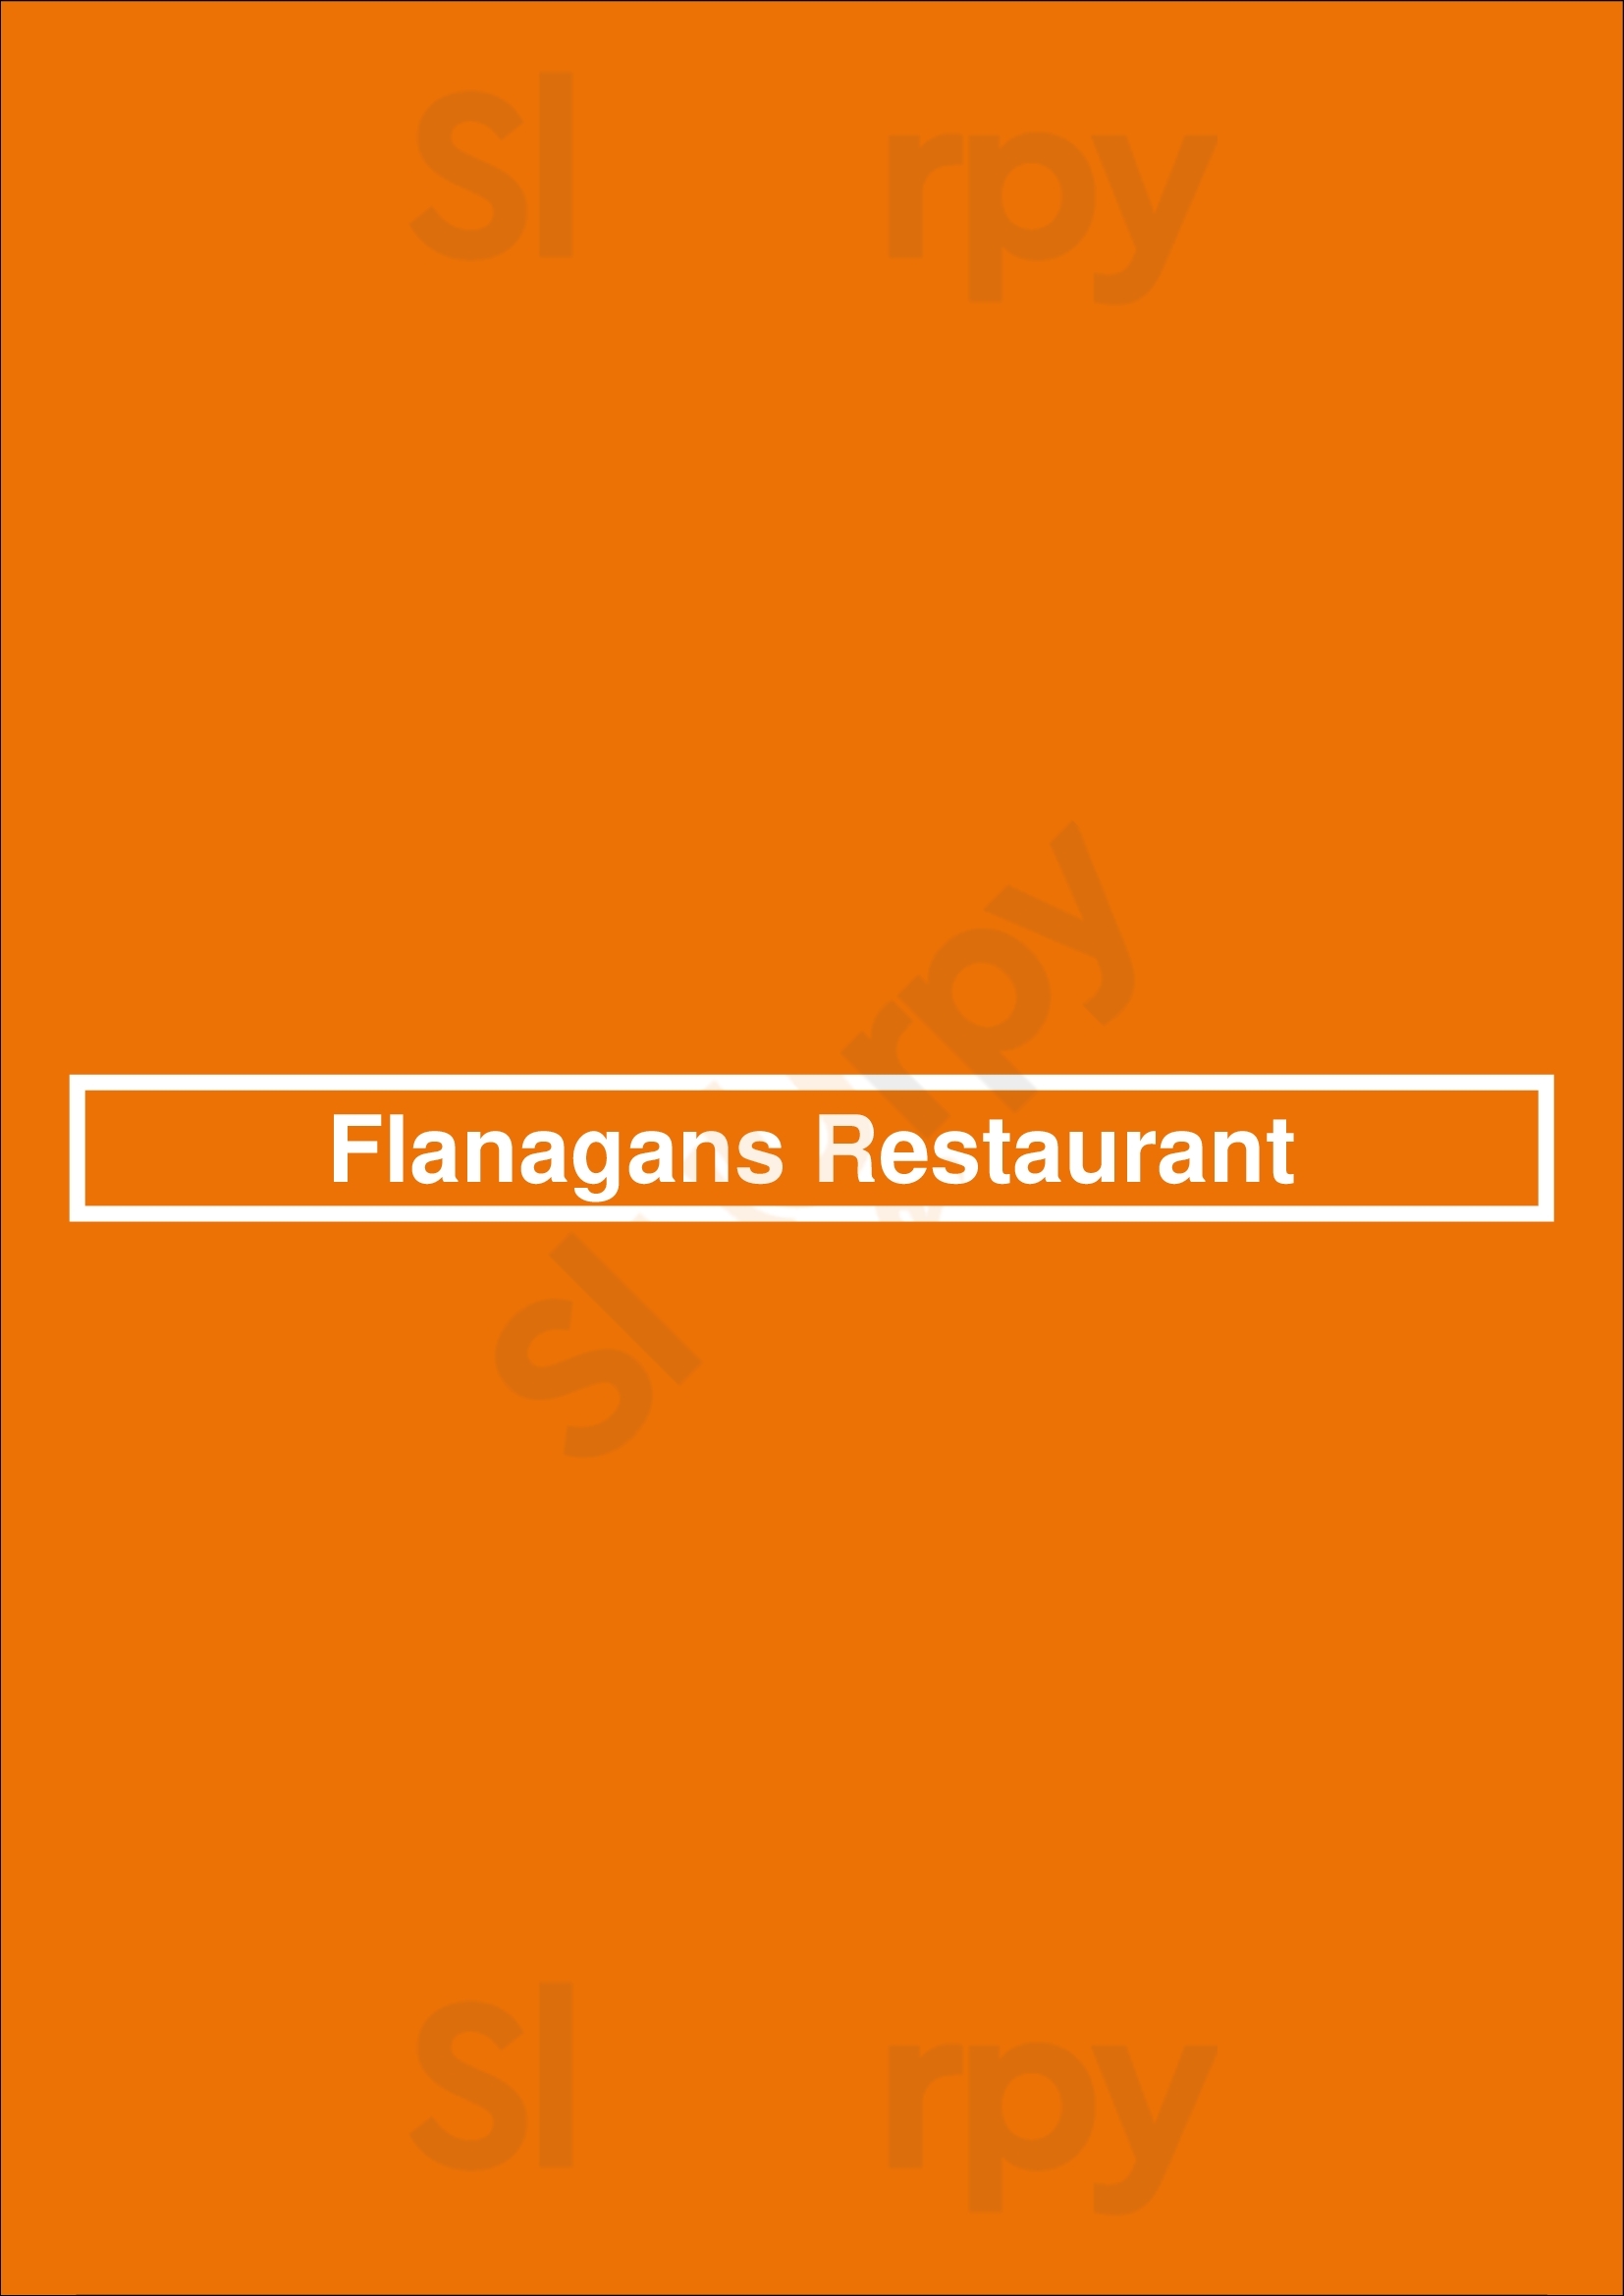 Flanagans Restaurant Dublin Menu - 1